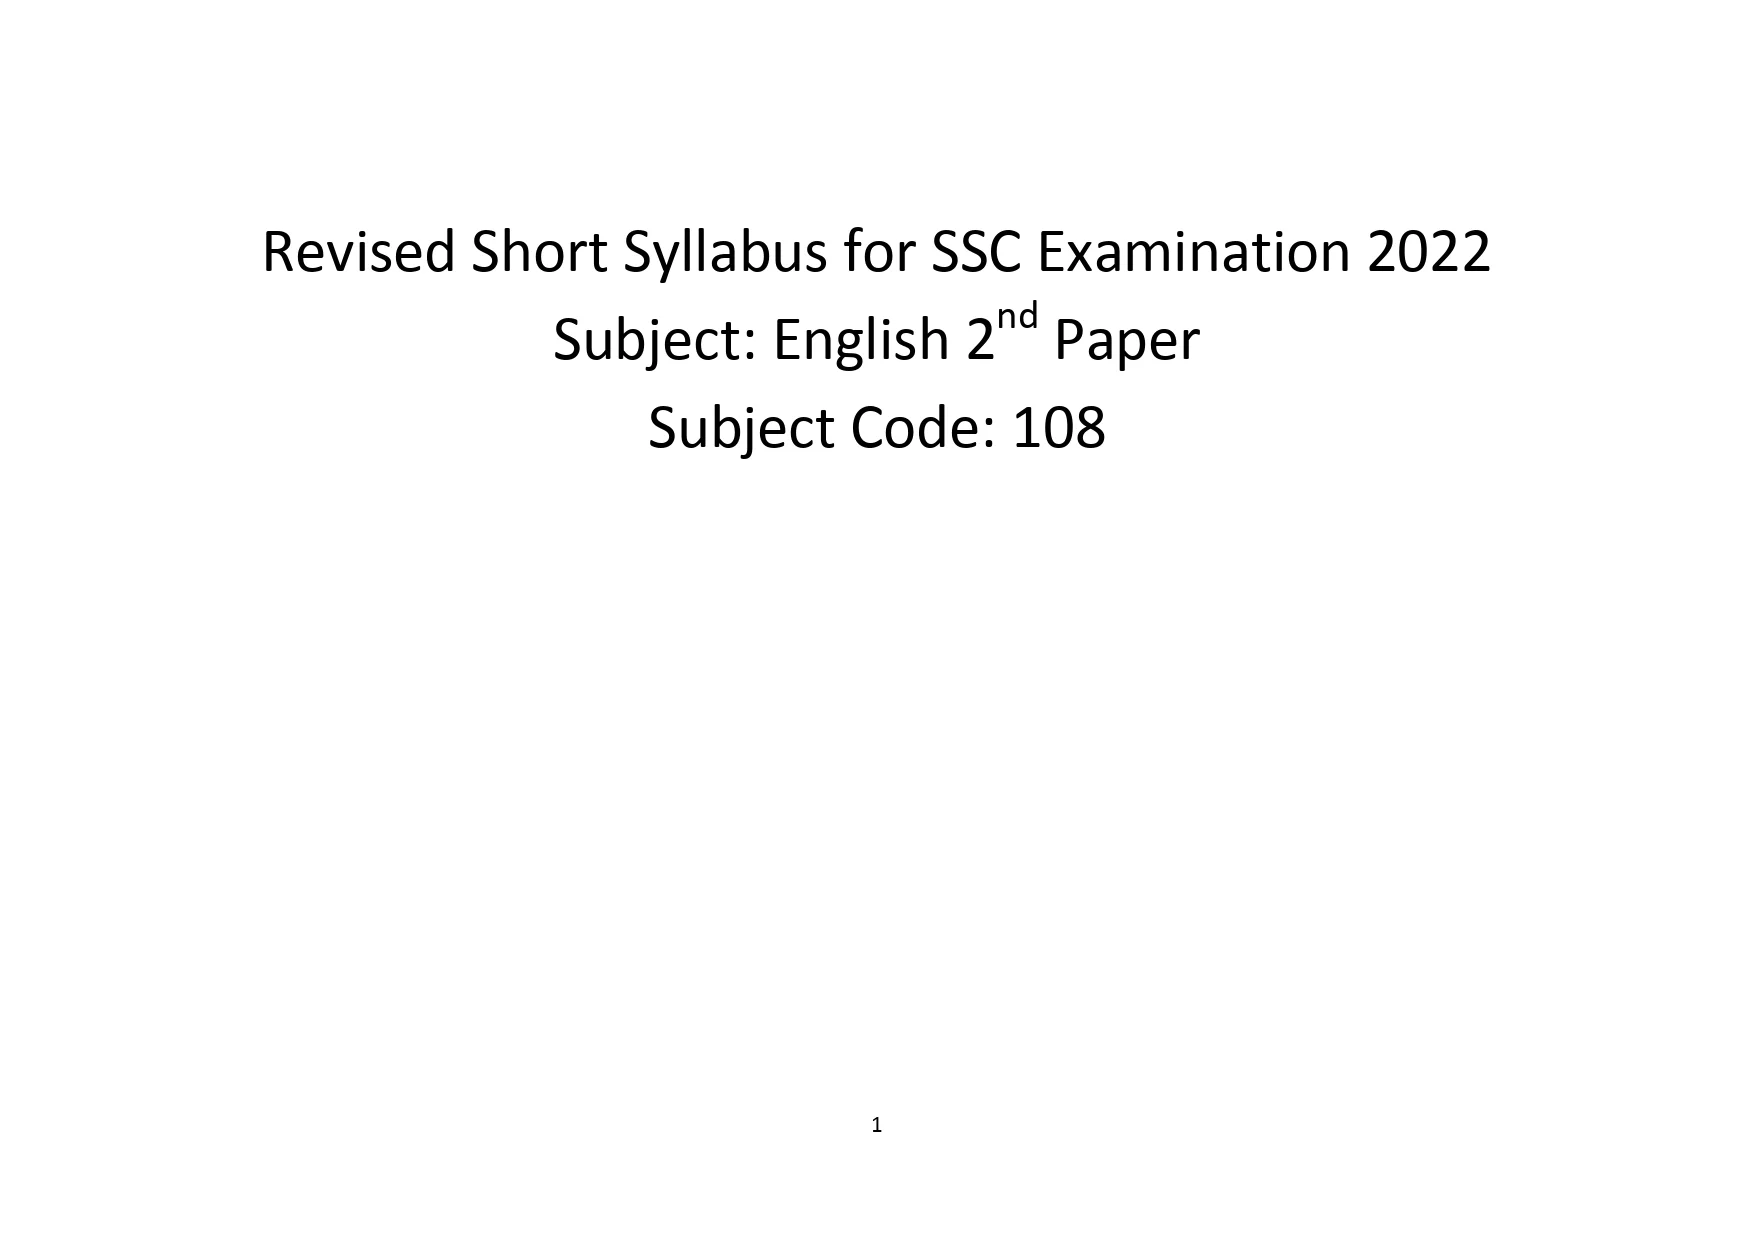 English 2nd Paper Short Syllabus 2022